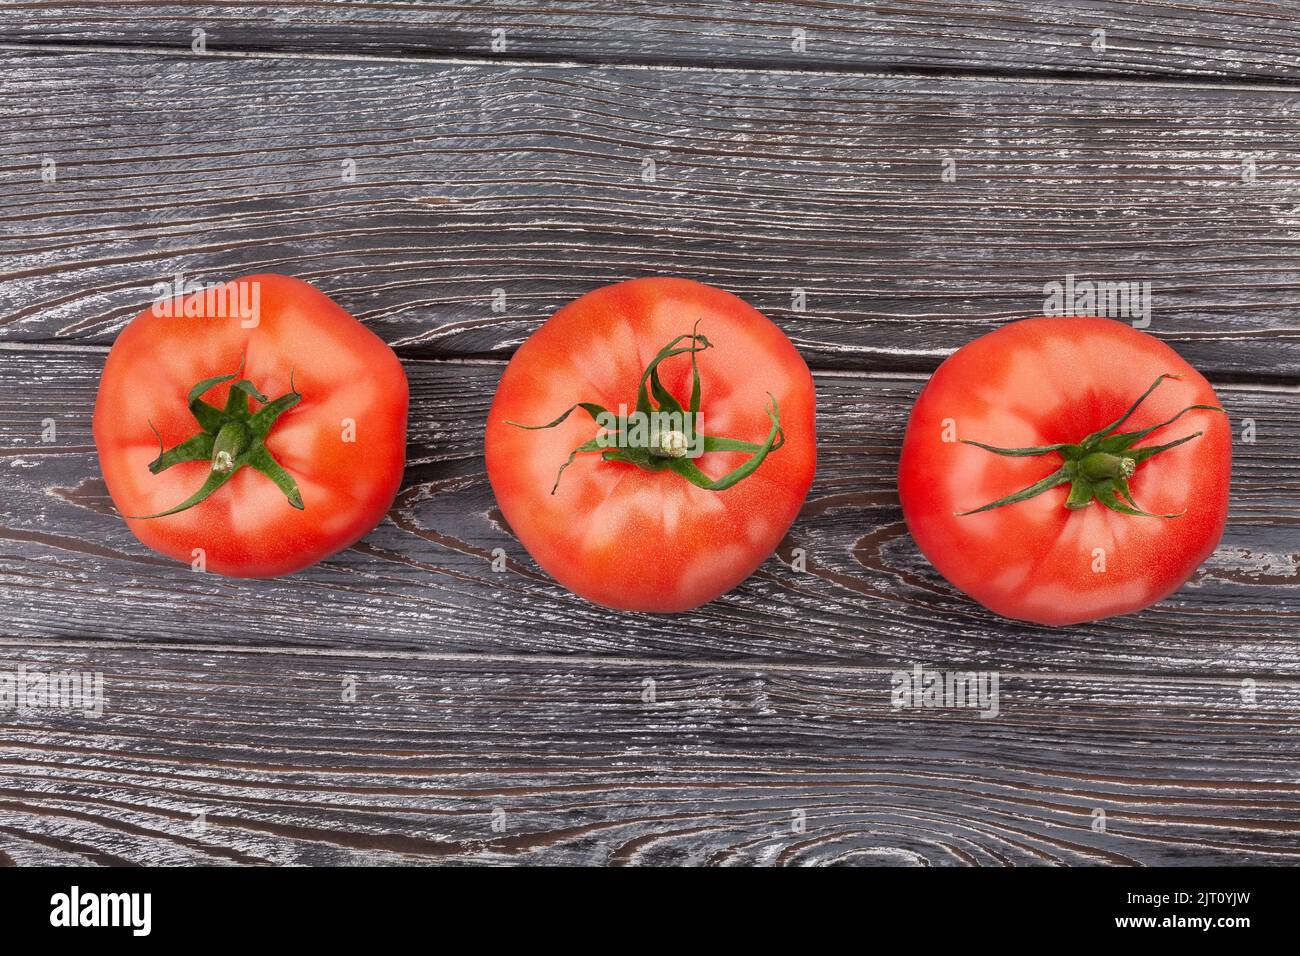 three tomatoes on wood background Stock Photo